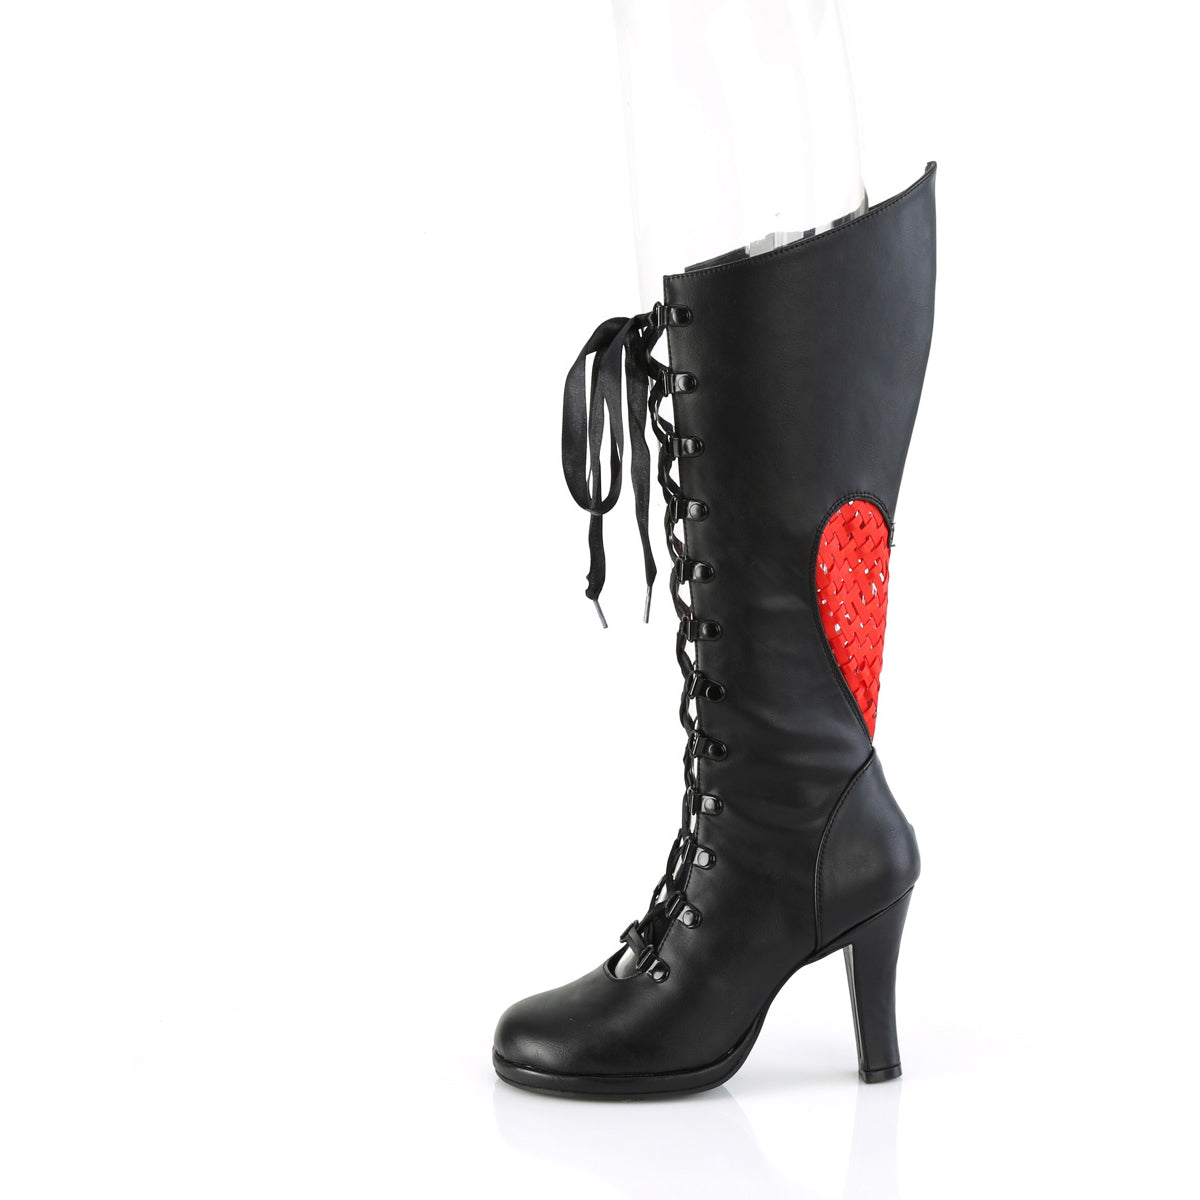 3 3/4" Heel, 1/2" Pf Lace-Up Knee High Boot, Inside Zip Pleaser Demonia GLAM243/BVL-RSA